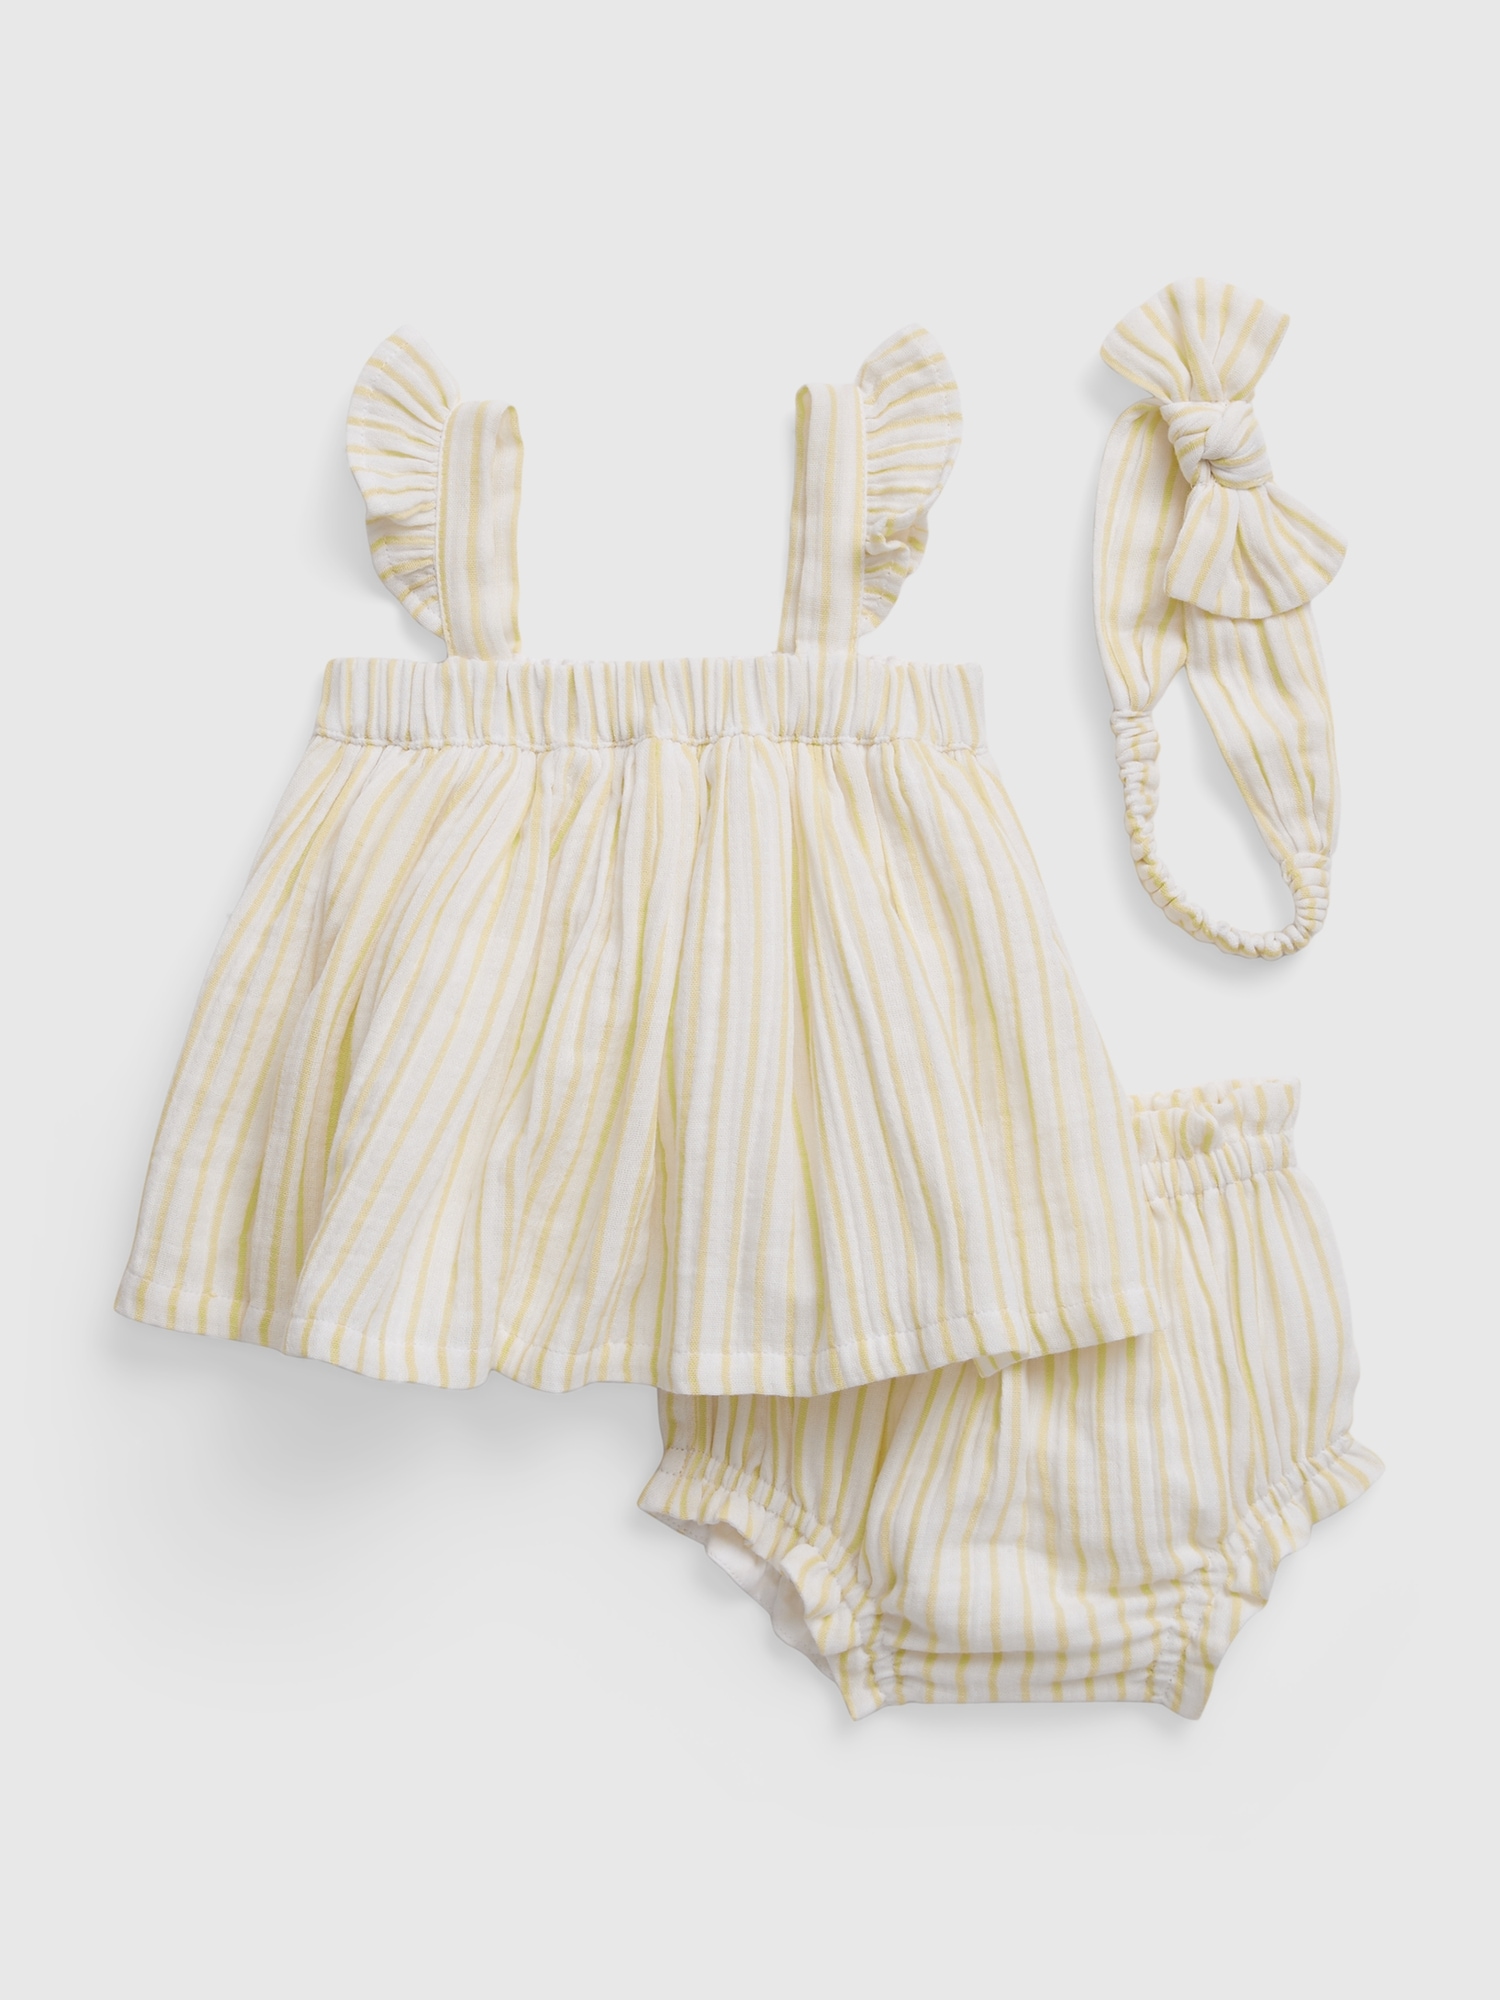 Baby Crinkle Gauze Outfit Set | Gap